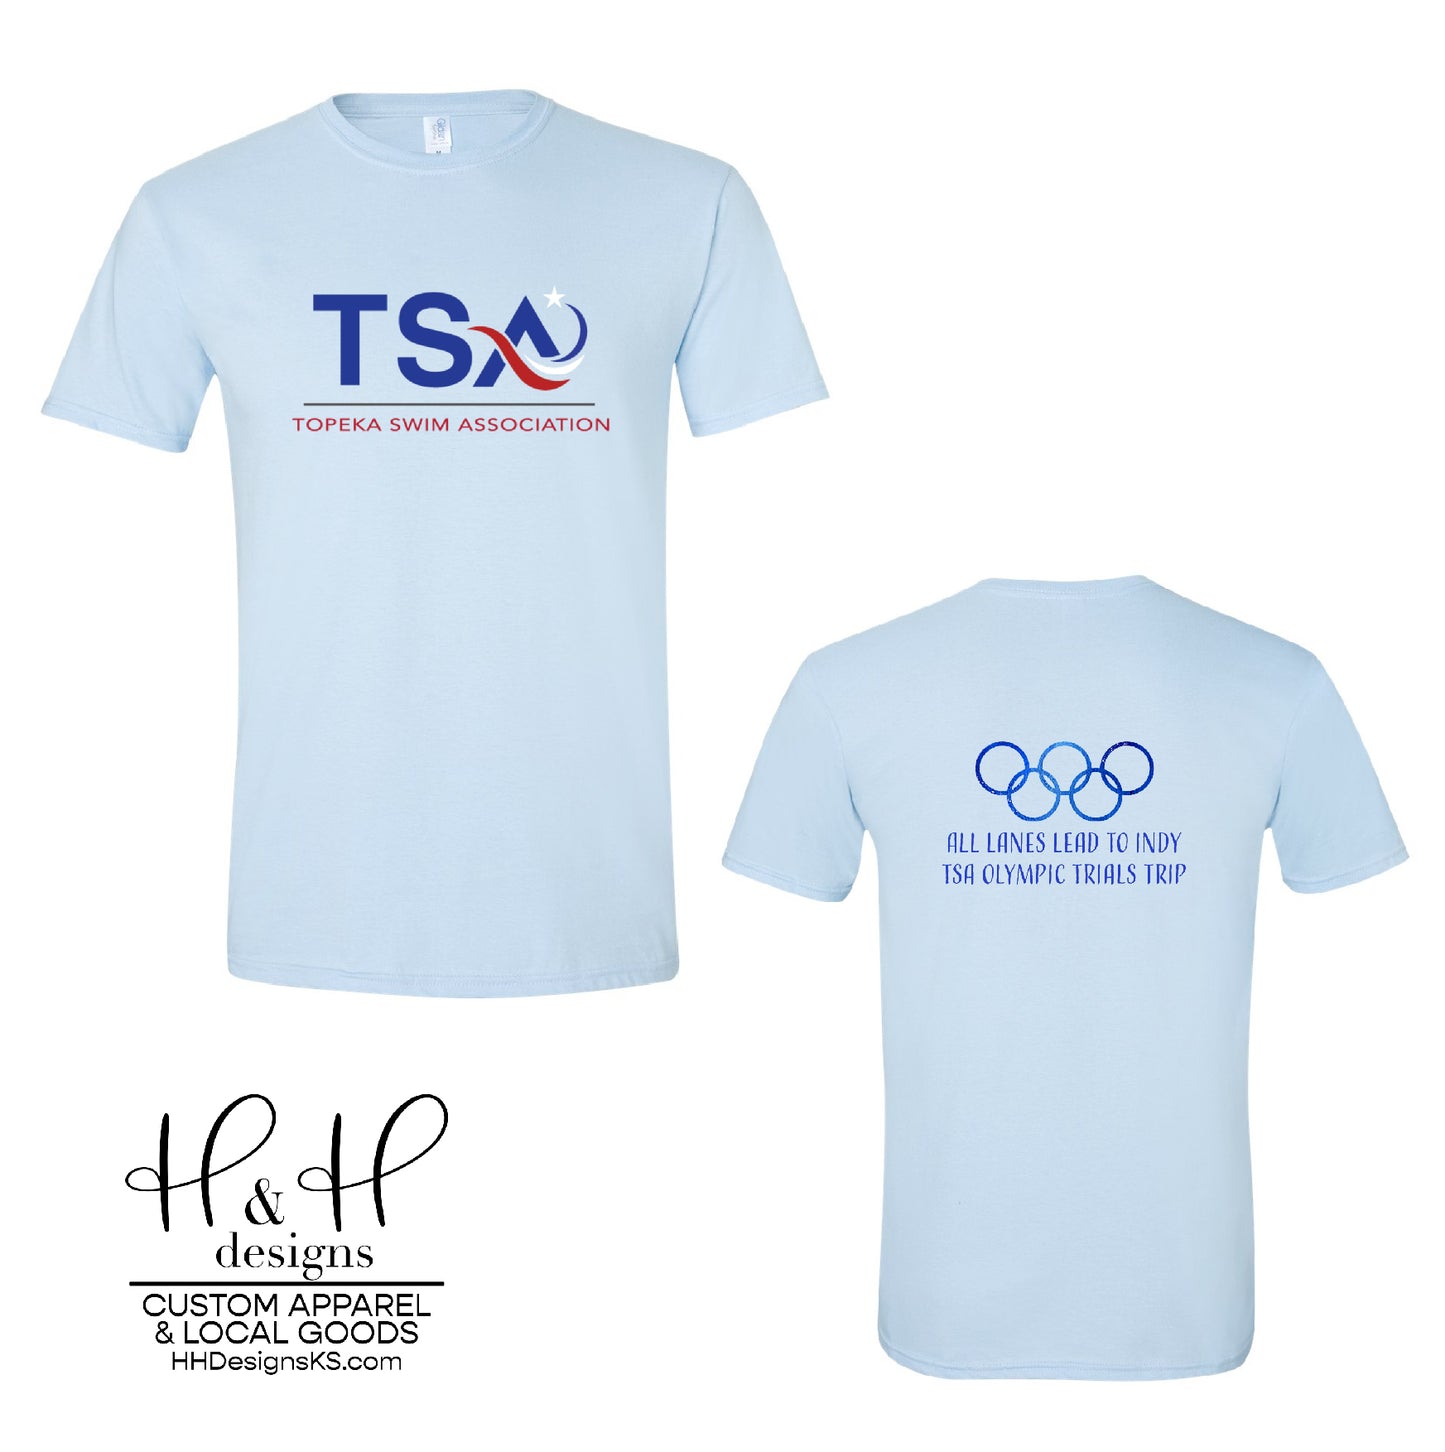 TSA Indy Olympic Trials